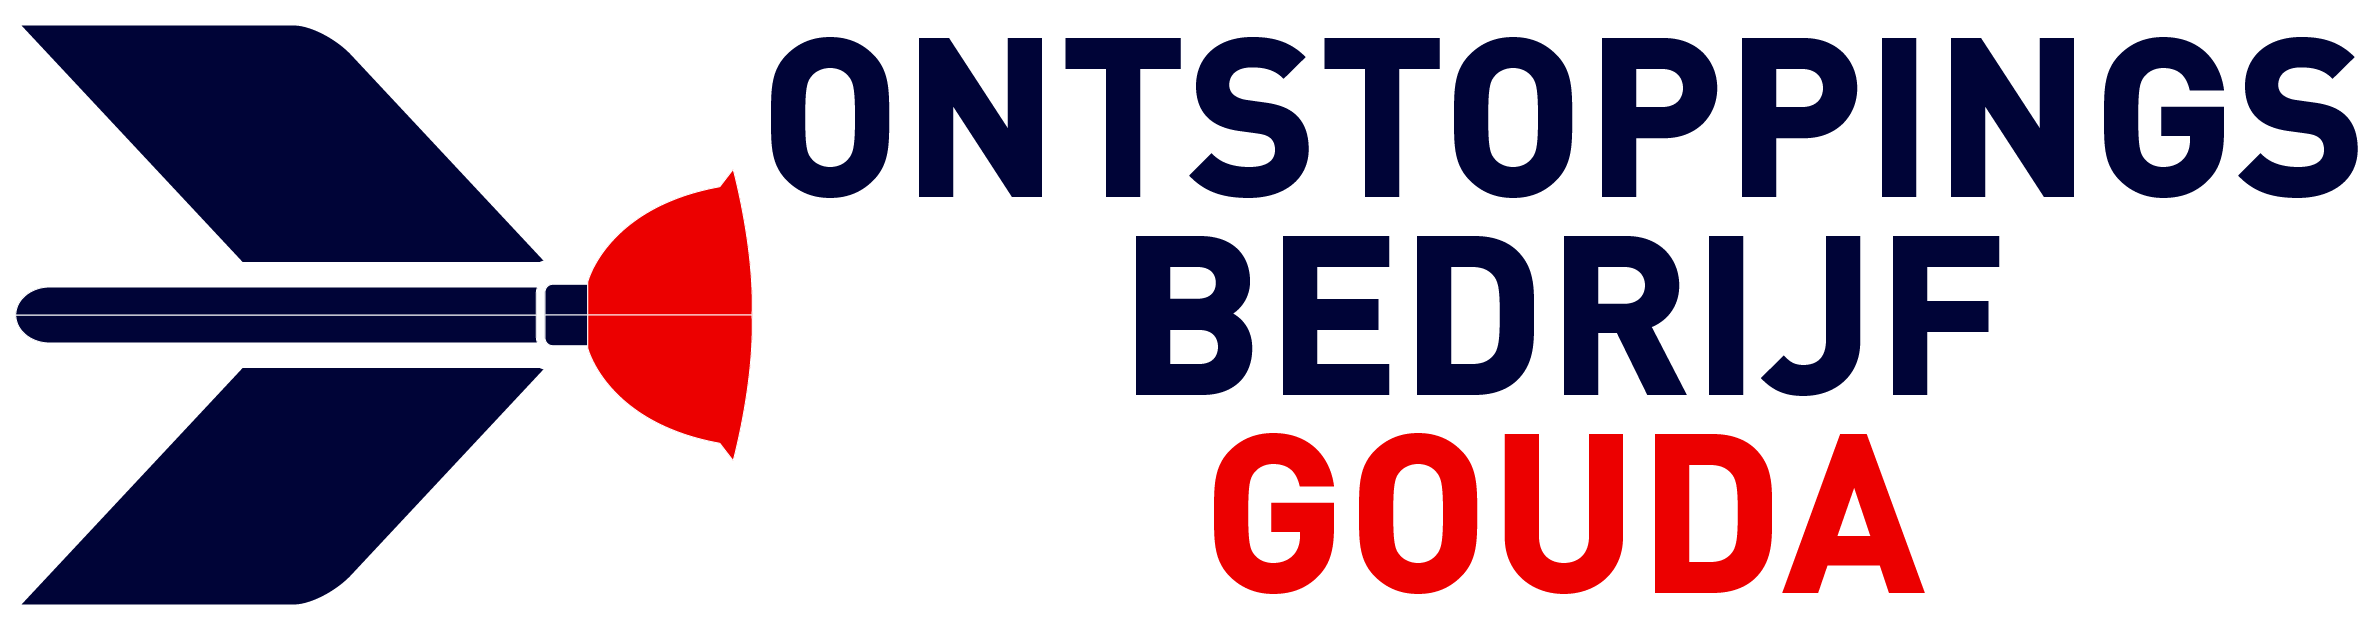 Ontstoppingsbedrijf Gouda logo